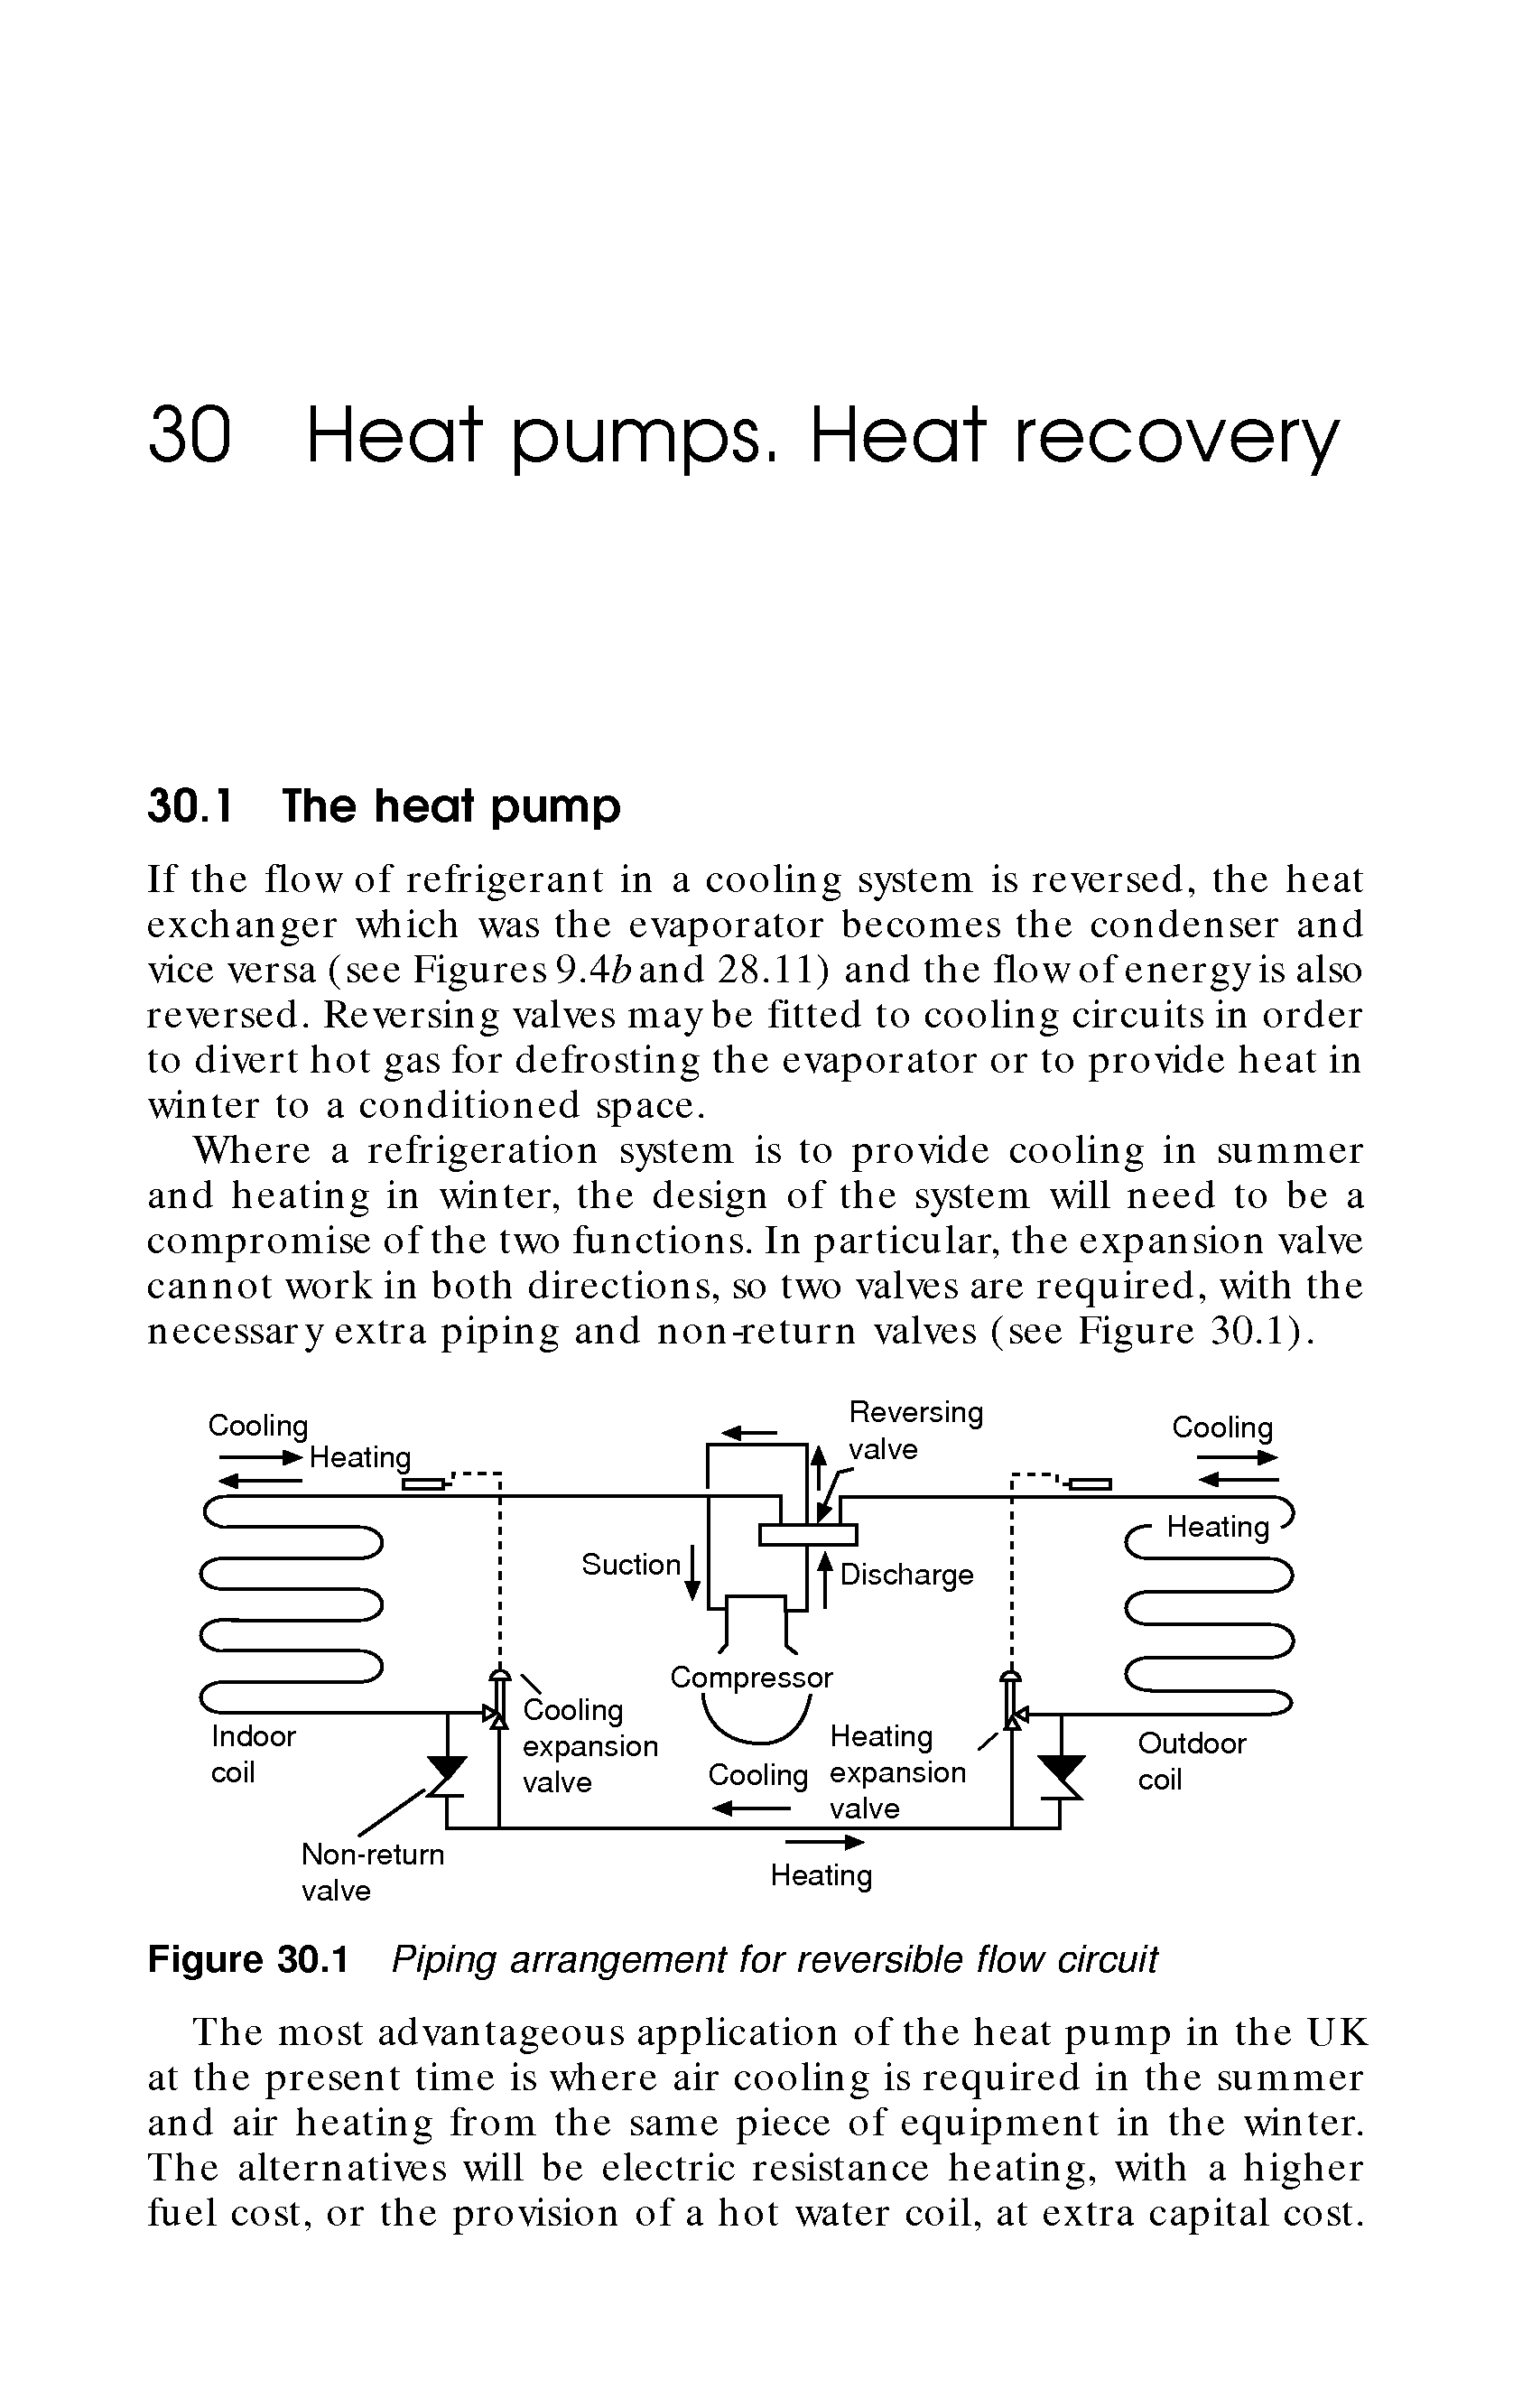 Figure 30.1 Piping arrangement for reversible flow circuit...